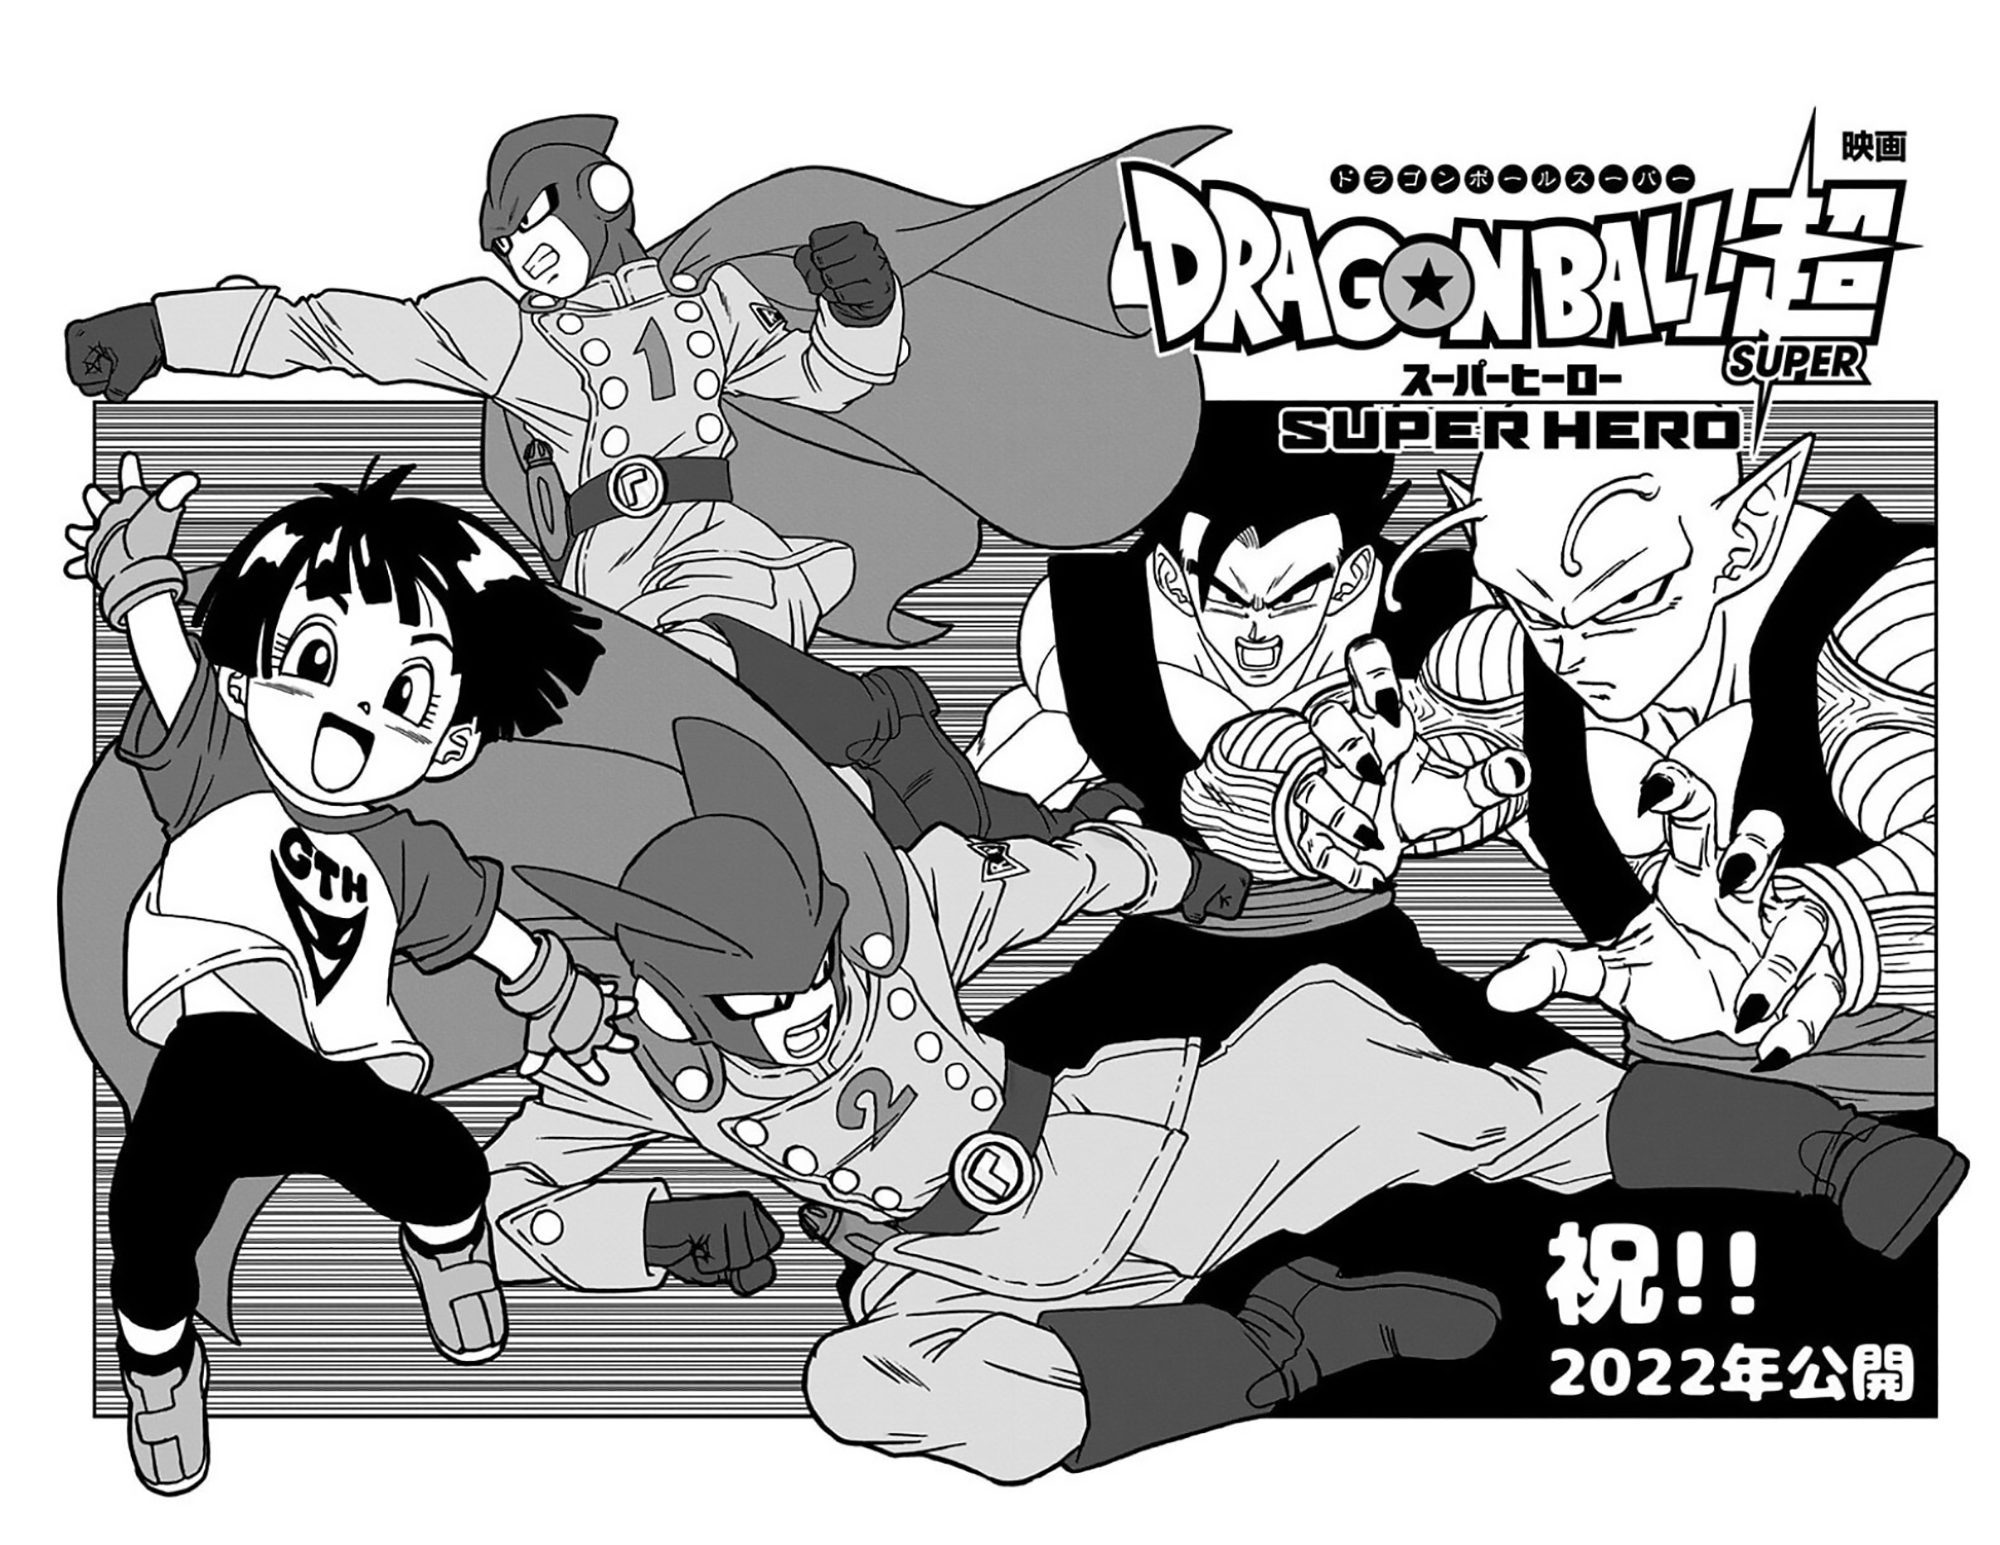 Dragon Ball Super: Super Hero Toyotarou's illustration